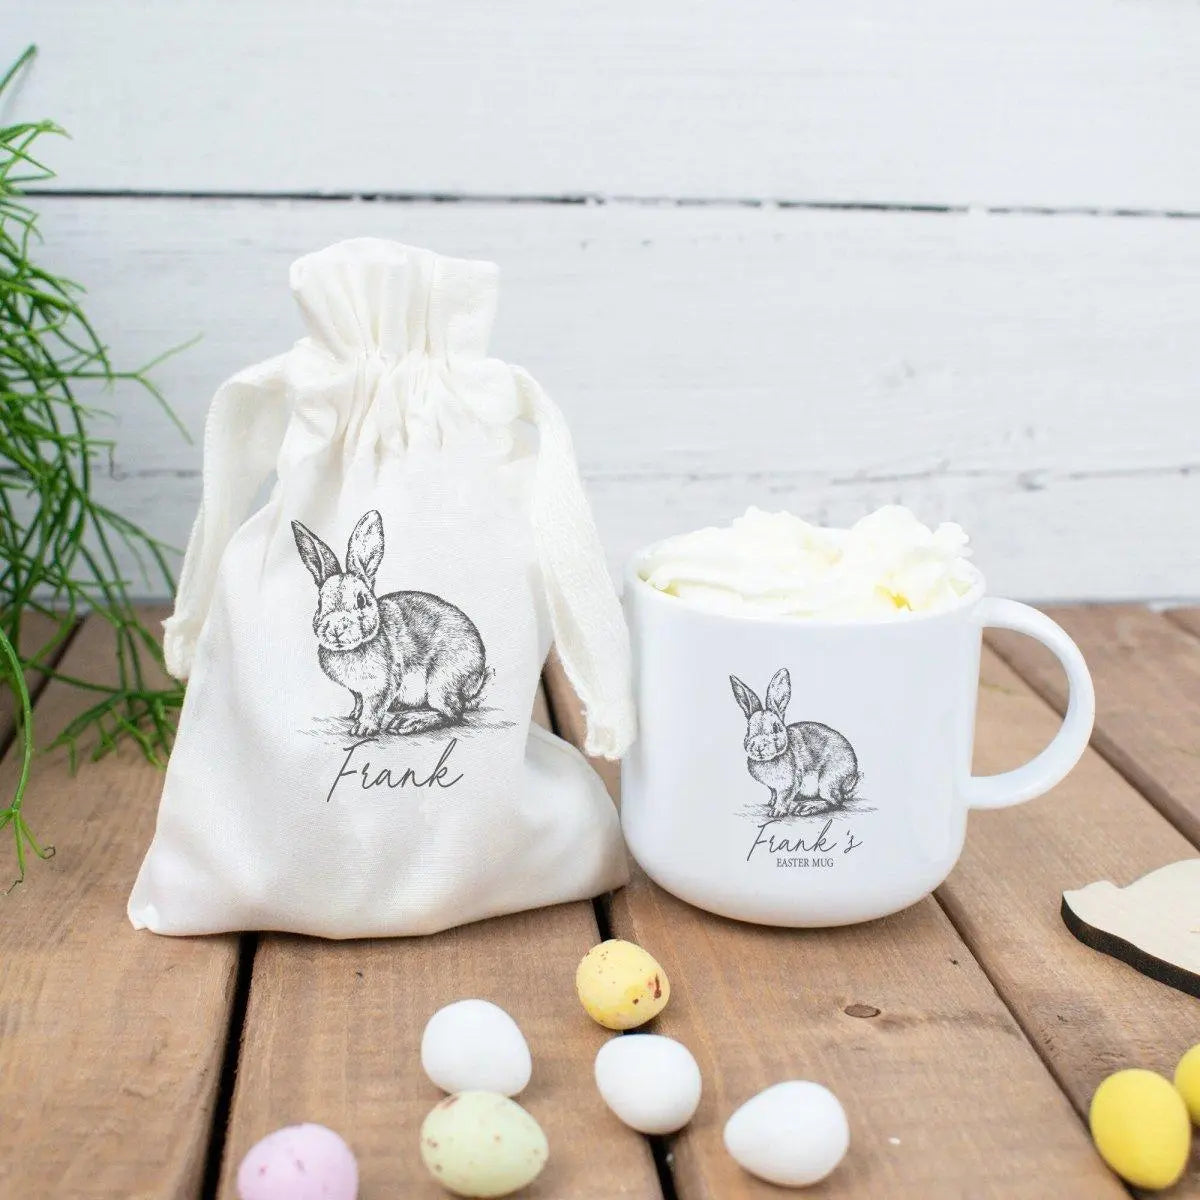 Personalised Easter Mug Set, Easter Bunny Mug, Vintage Rabbit Mug, Easter Gift Her, Mini Egg Bag, Personalised Easter Gift Set, Easter Mug - Amy Lucy